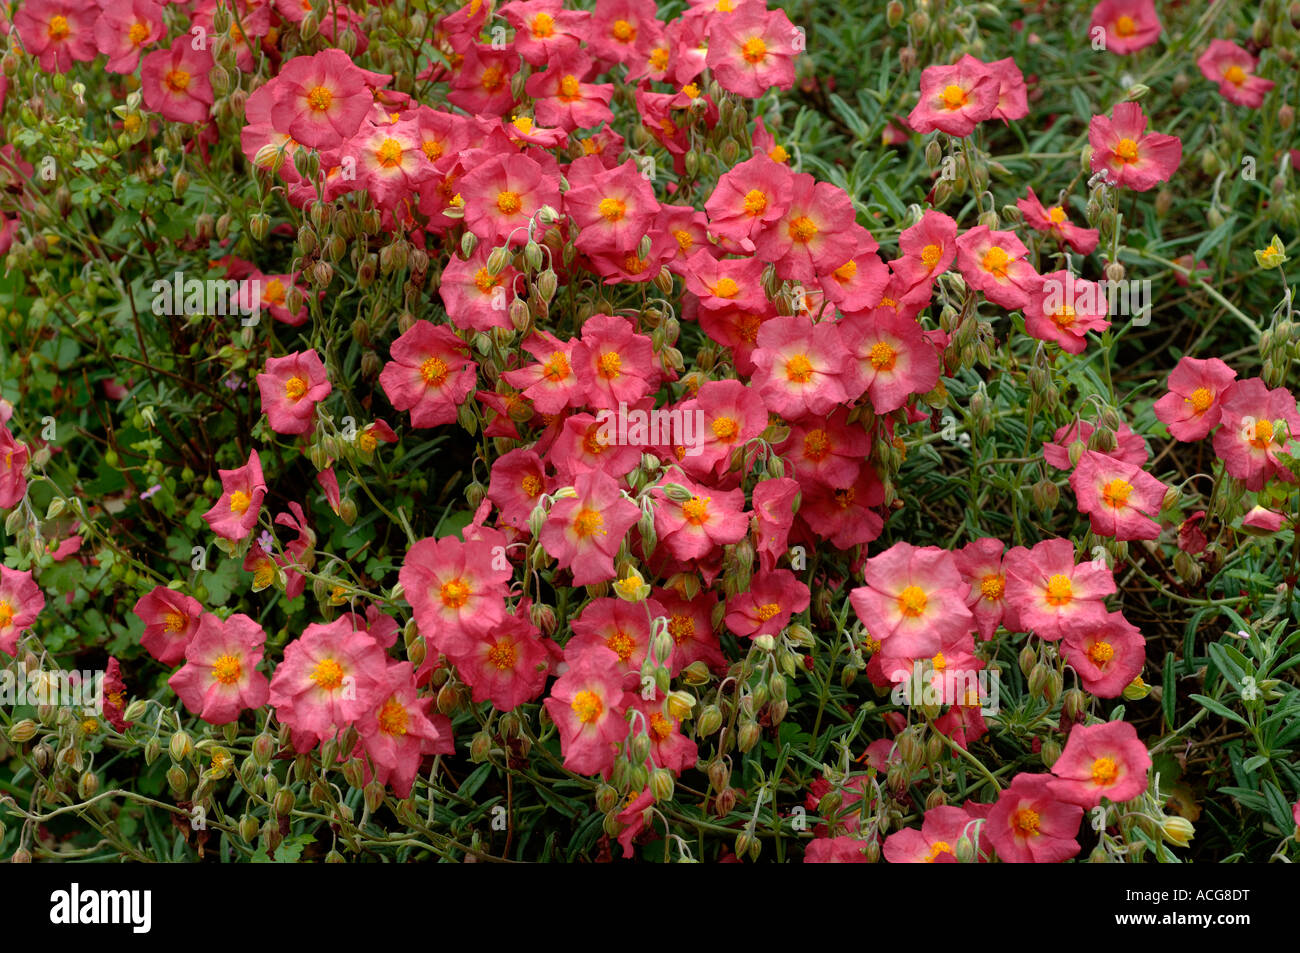 Red rock rose or sun rose Helianthemum spp flowers Stock Photo